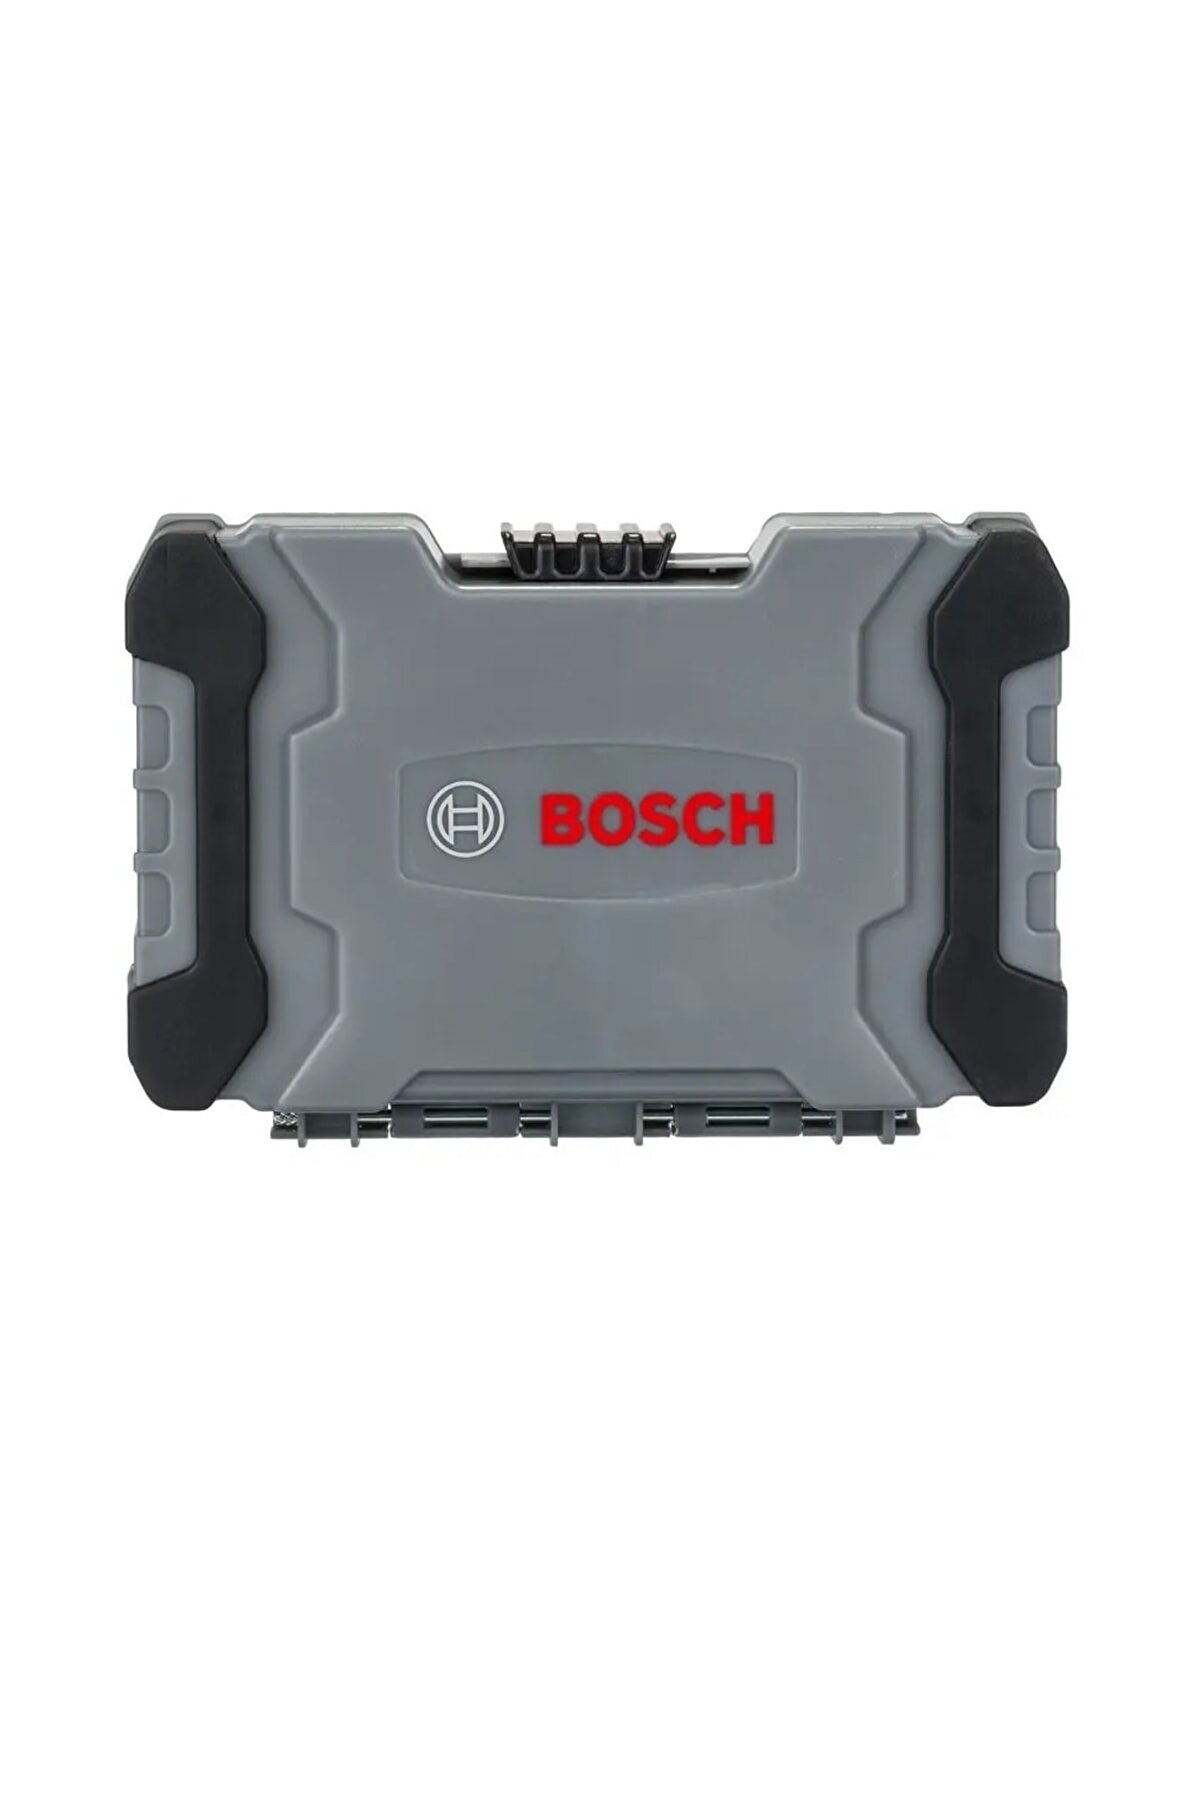 Bosch%2035%20Parça%20Profesyonel%20Karışık%20Beton%20Delme%20ve%20Vidalama%20Seti%20cyl-3